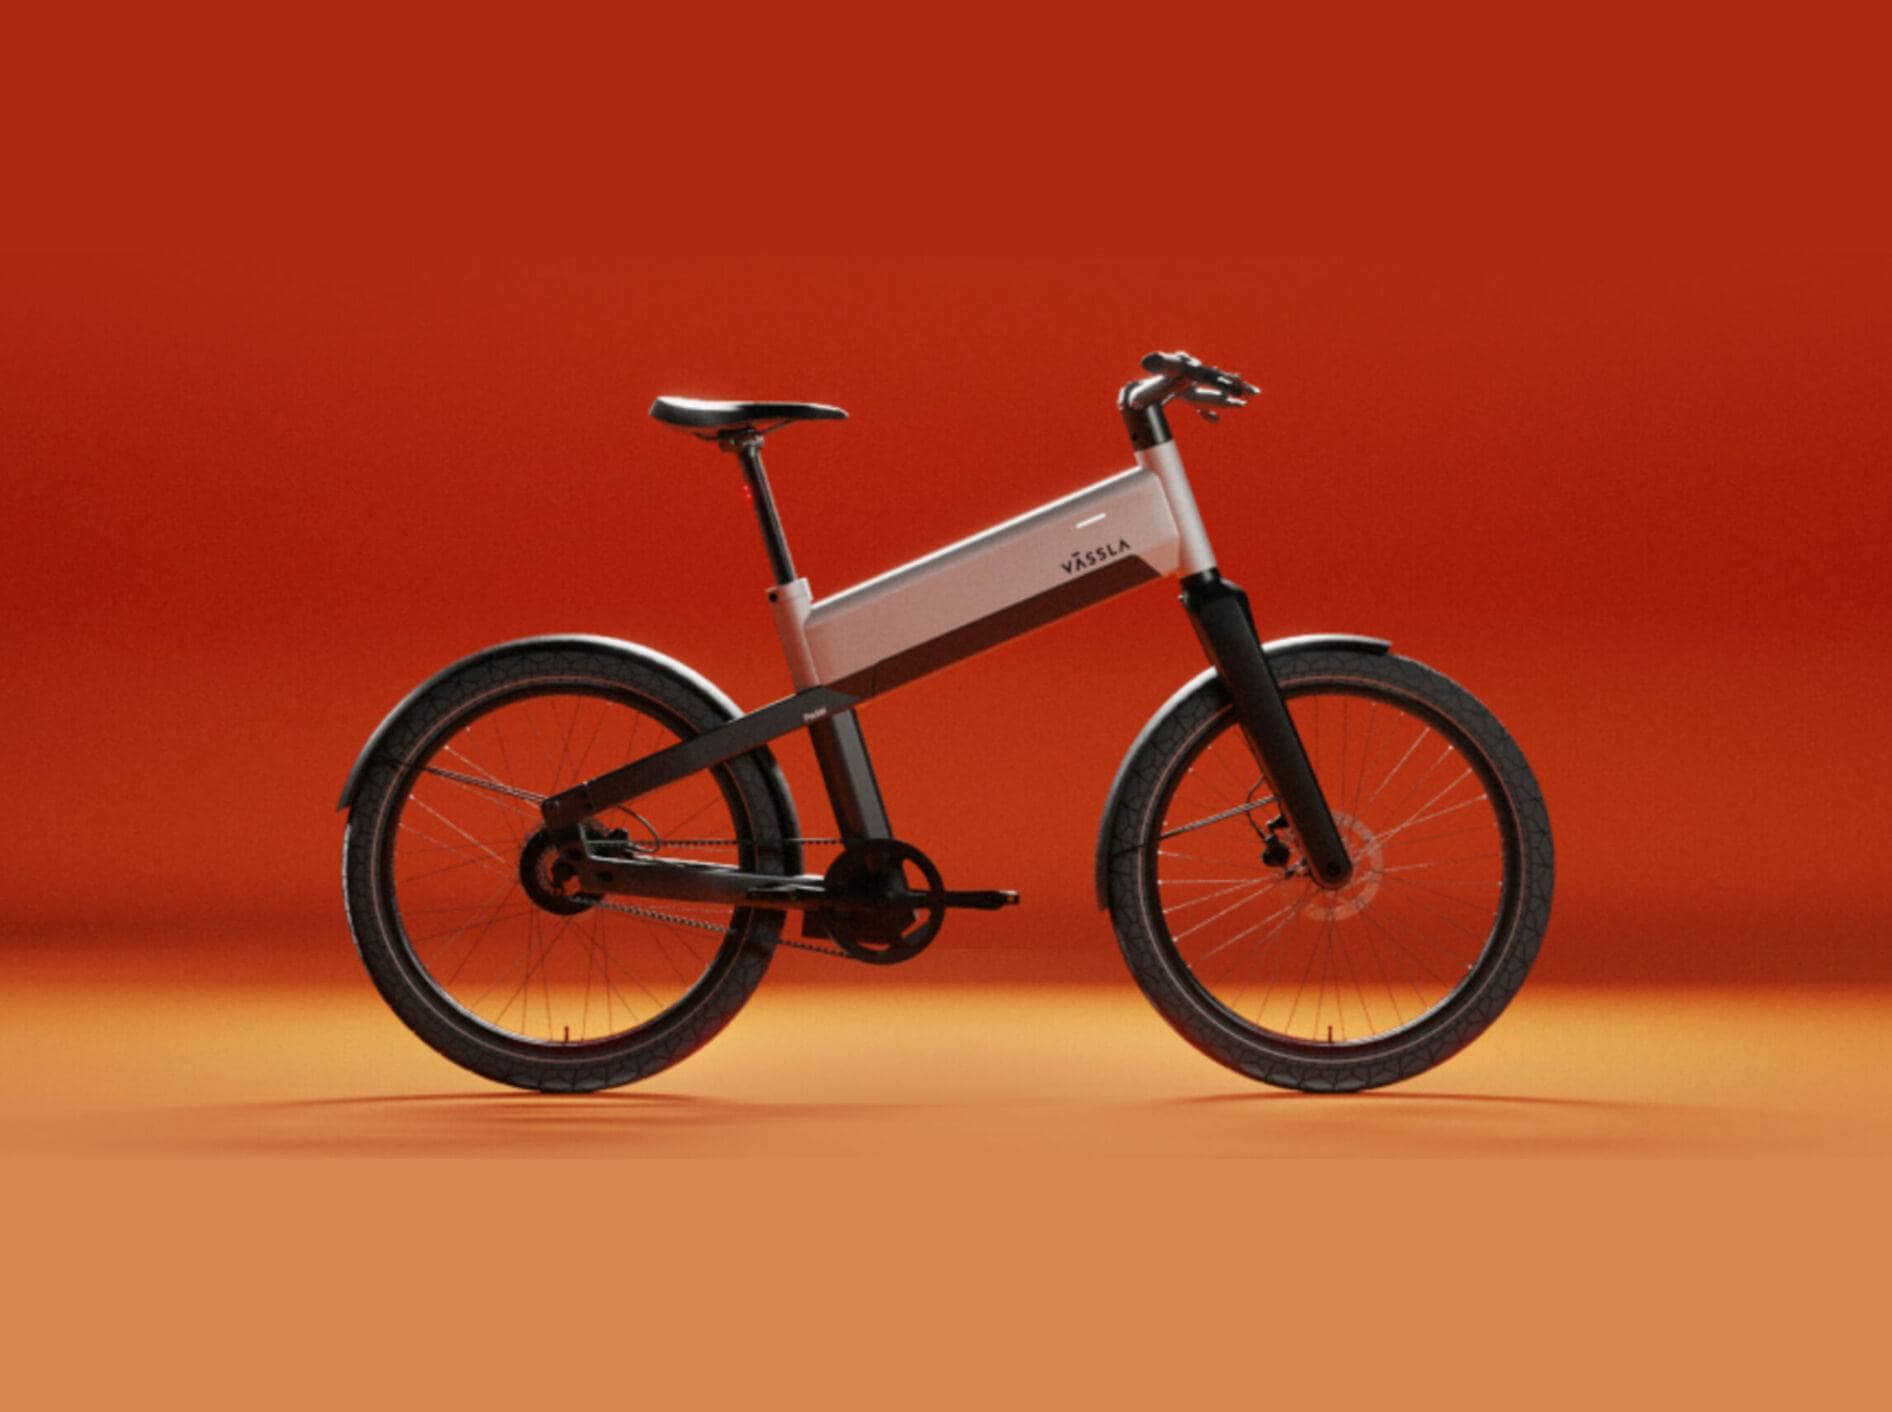 Vässla Pedal: E-Bike in minimalistischem Style